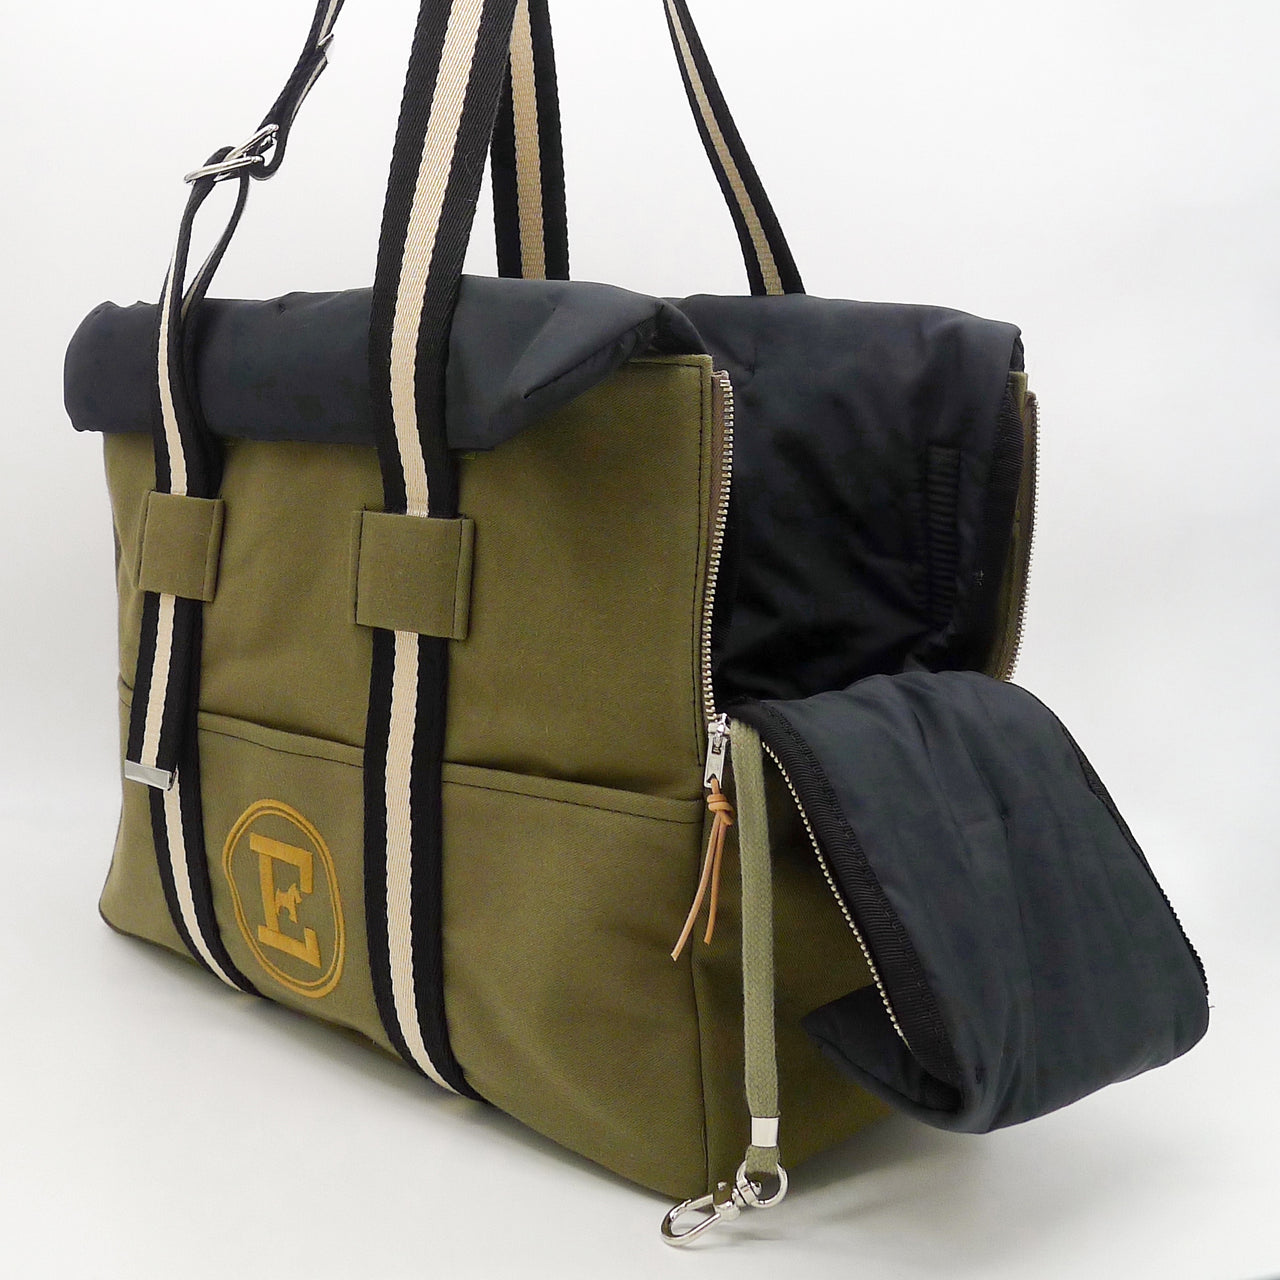 Luxury Dachshund Handbag Carrier